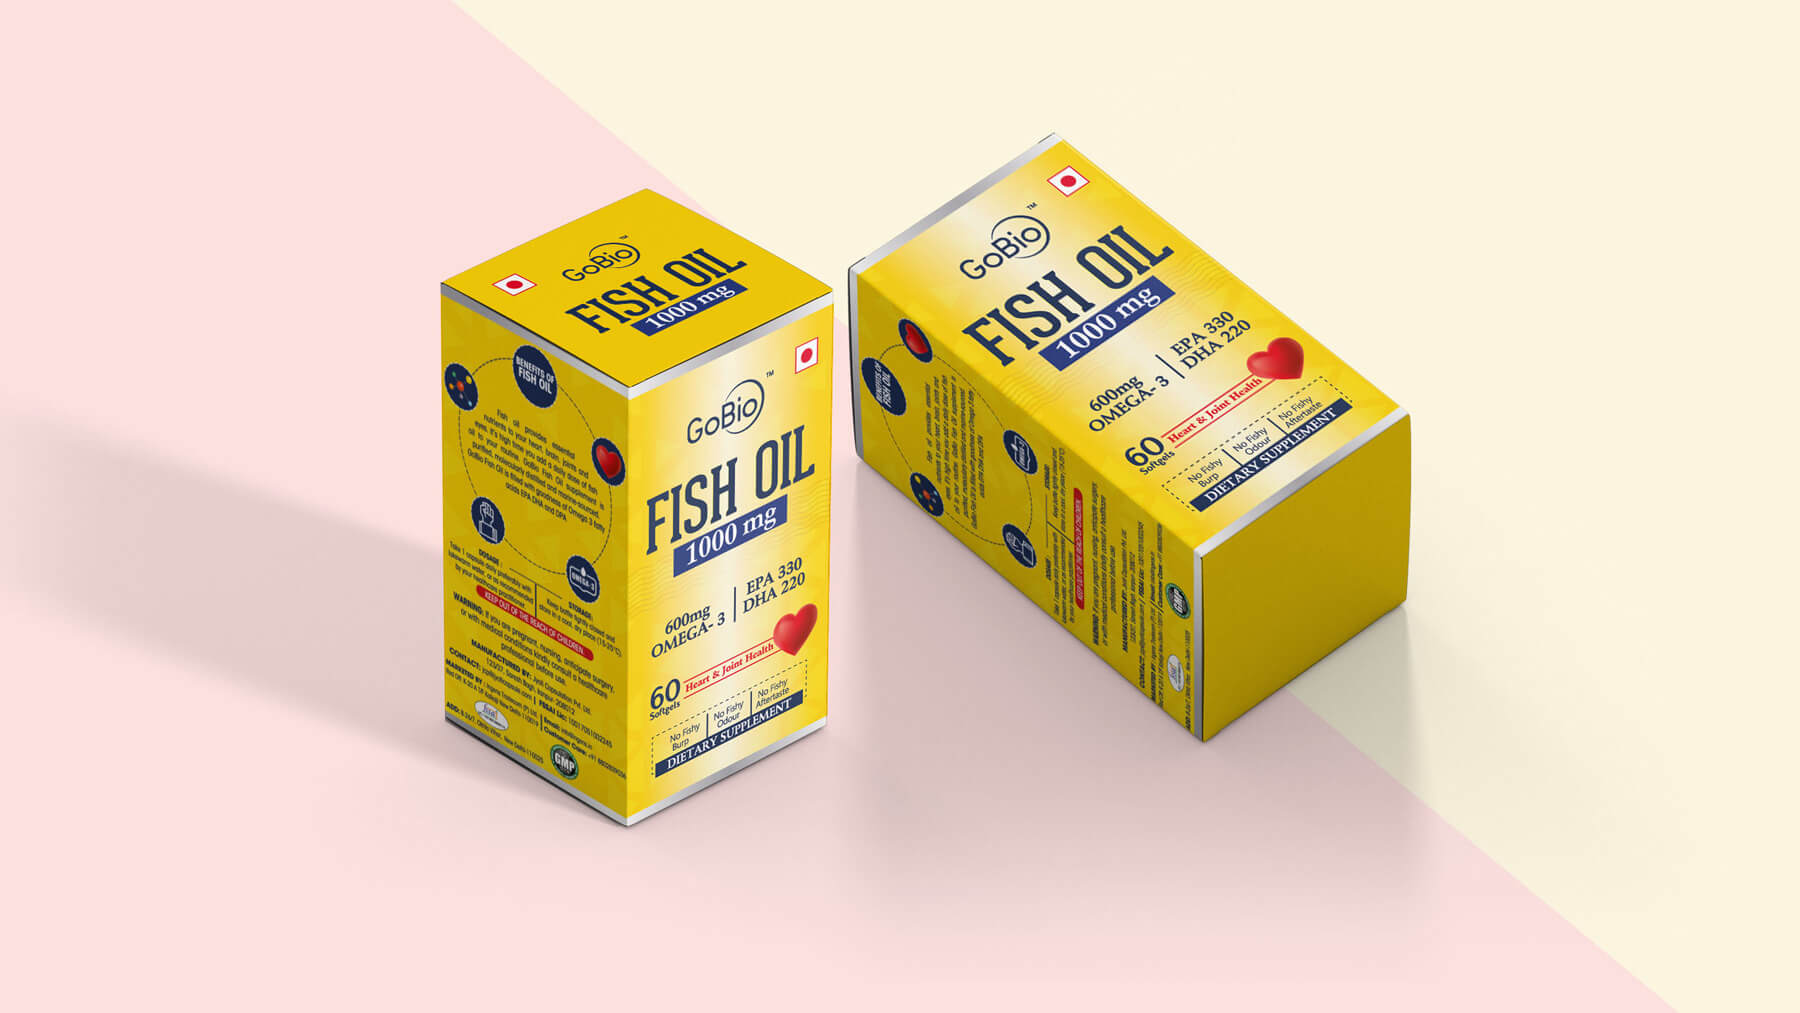 gobio fish oil medical packaging